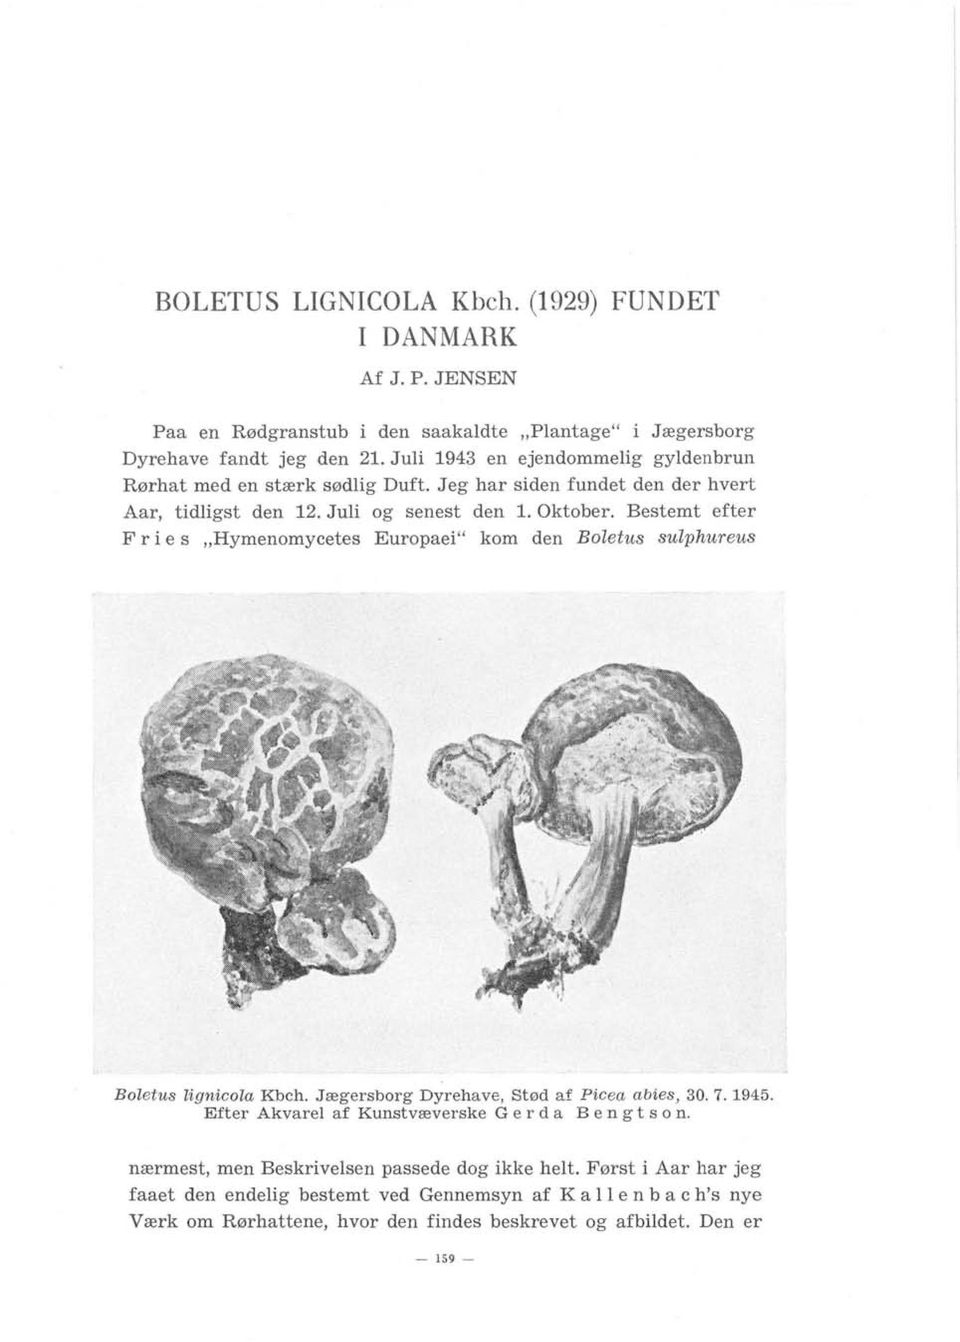 Bestemt efter F r i e s "Hymenomycetes Europaei" kom den Boletus sulphureus Boletus lignicola Kbch. Jægersborg Dyrehave, Stød af Picea abies, 30.7.1945.